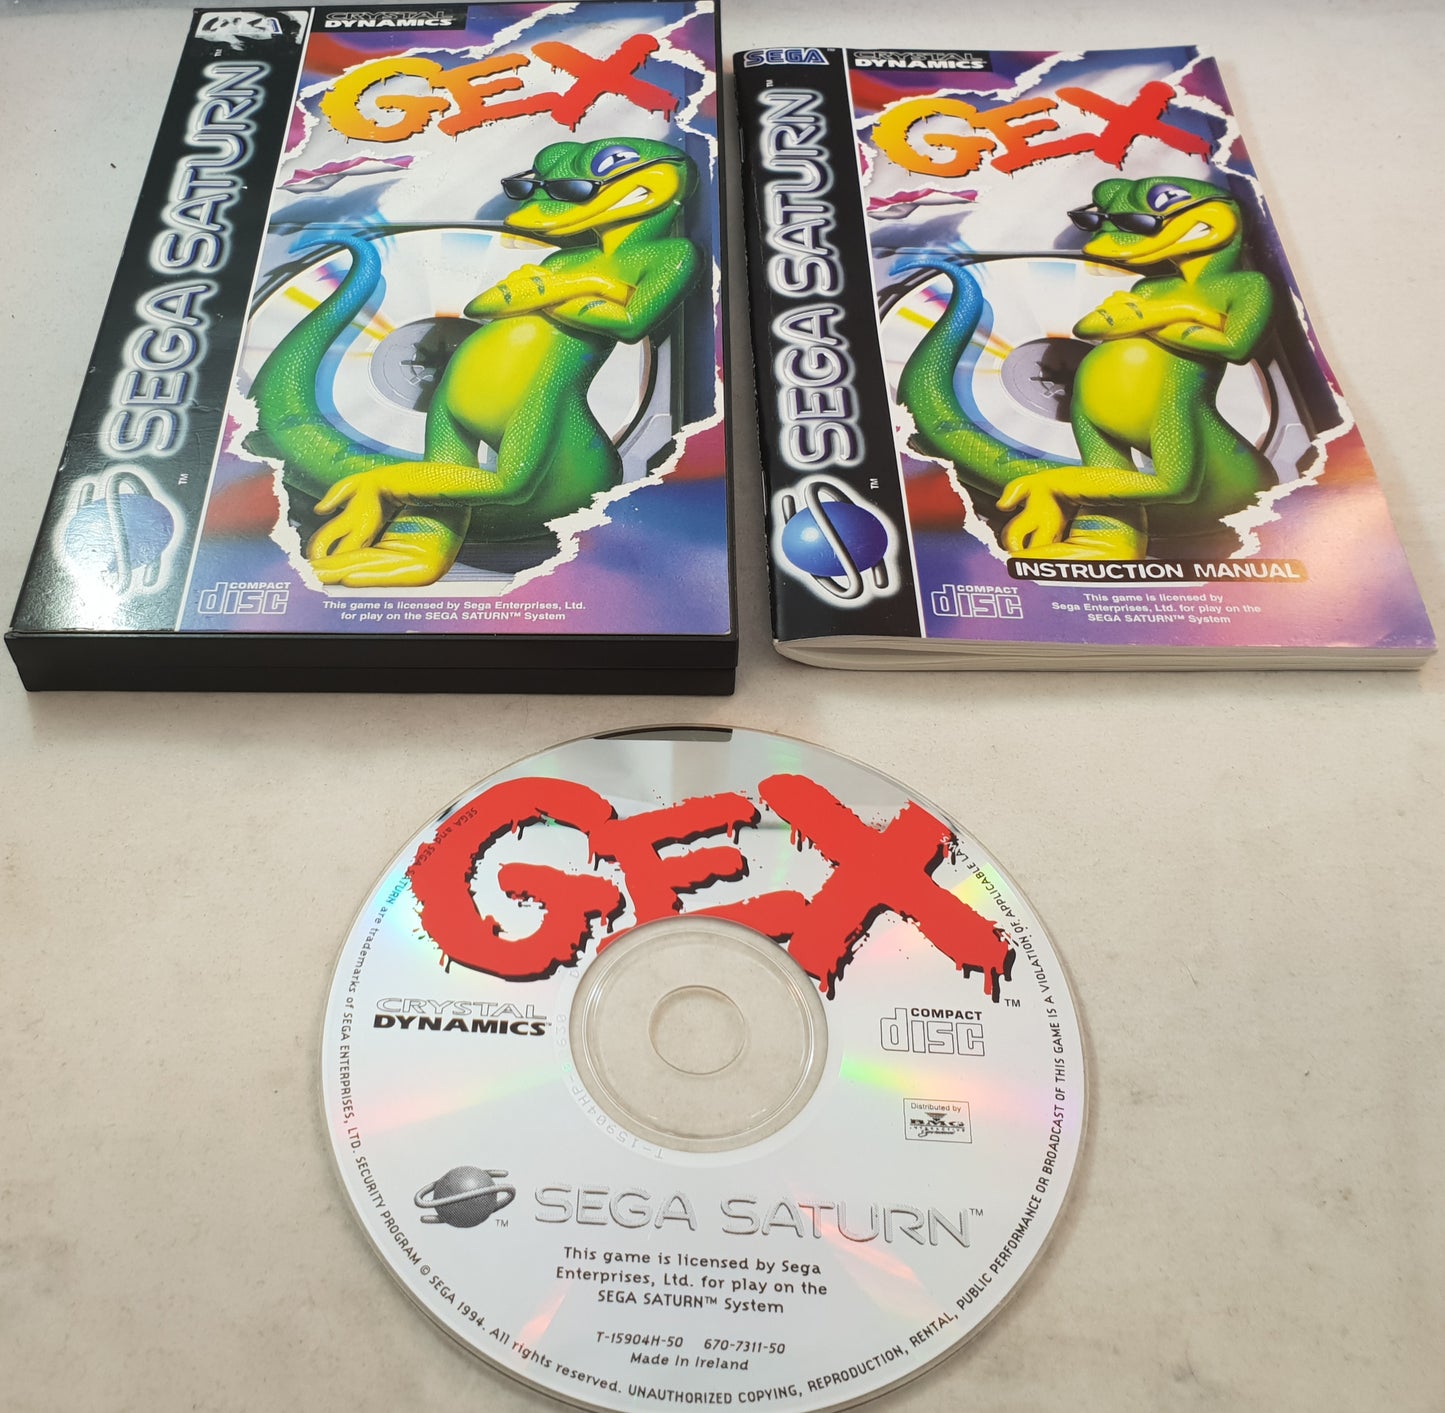 Gex Sega Saturn Game